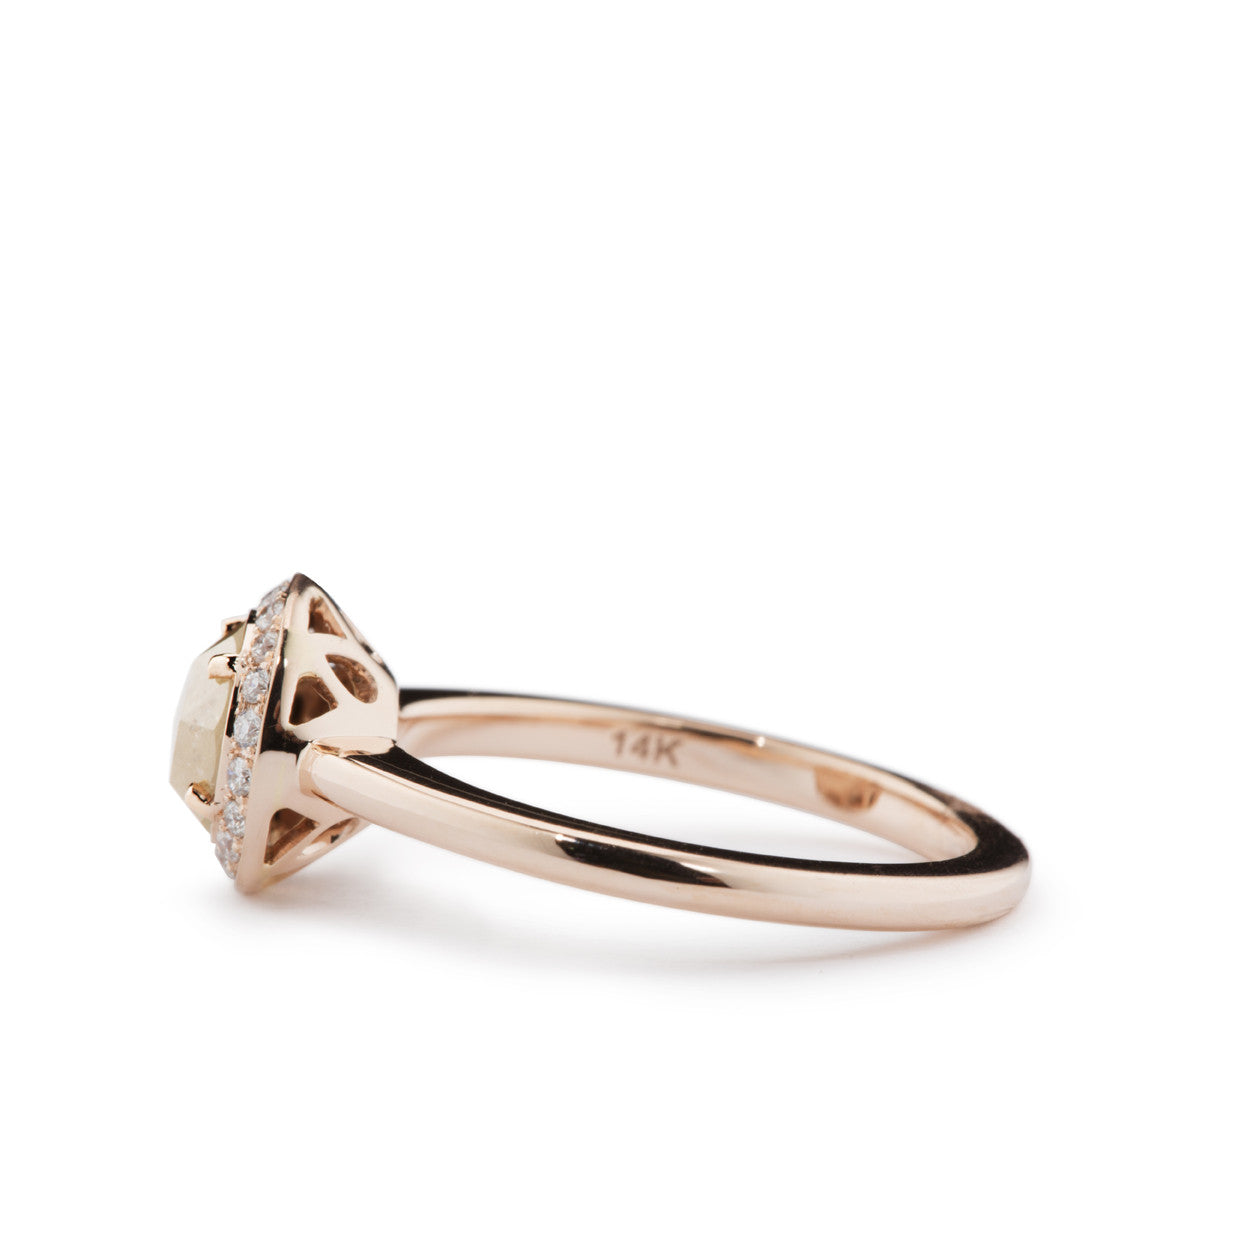 Rustic Diamond Ring in rose gold with diamond halo "Bohemian Princess" 